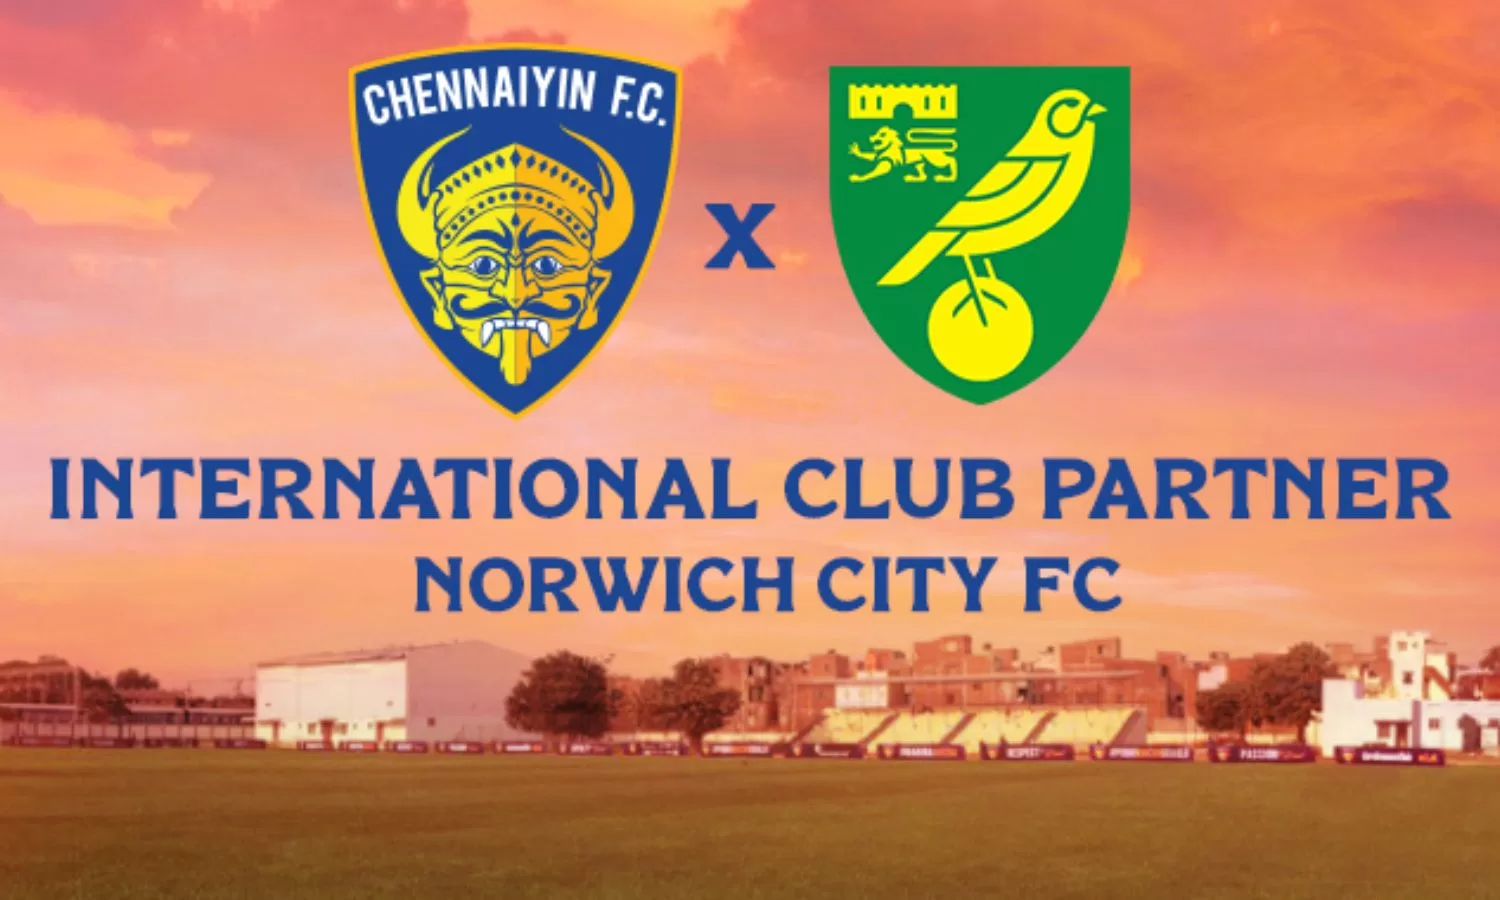 Chennaiyin FC and Norwich City FC announces a strategic partnership